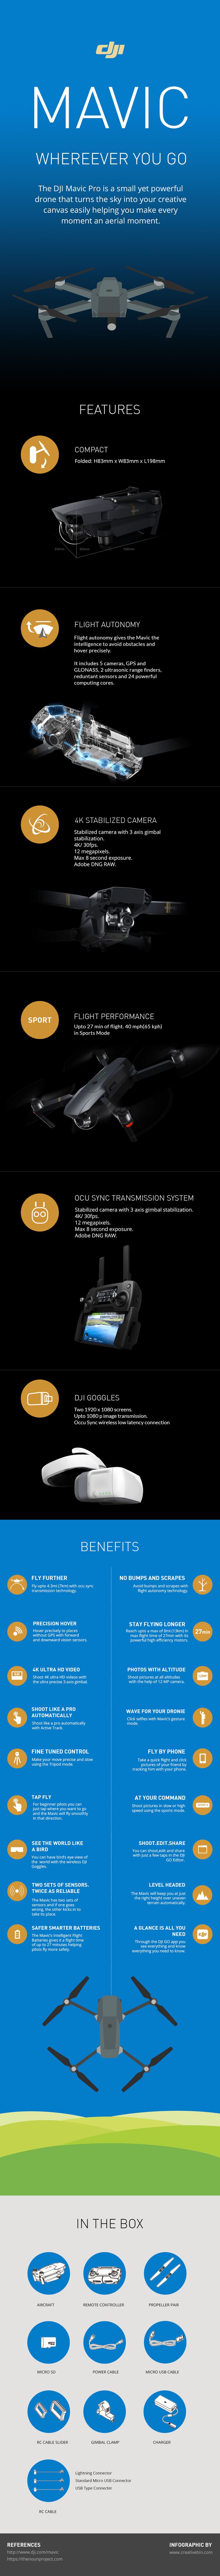 Infographic on Mavic Pro, DJI's latest drone.